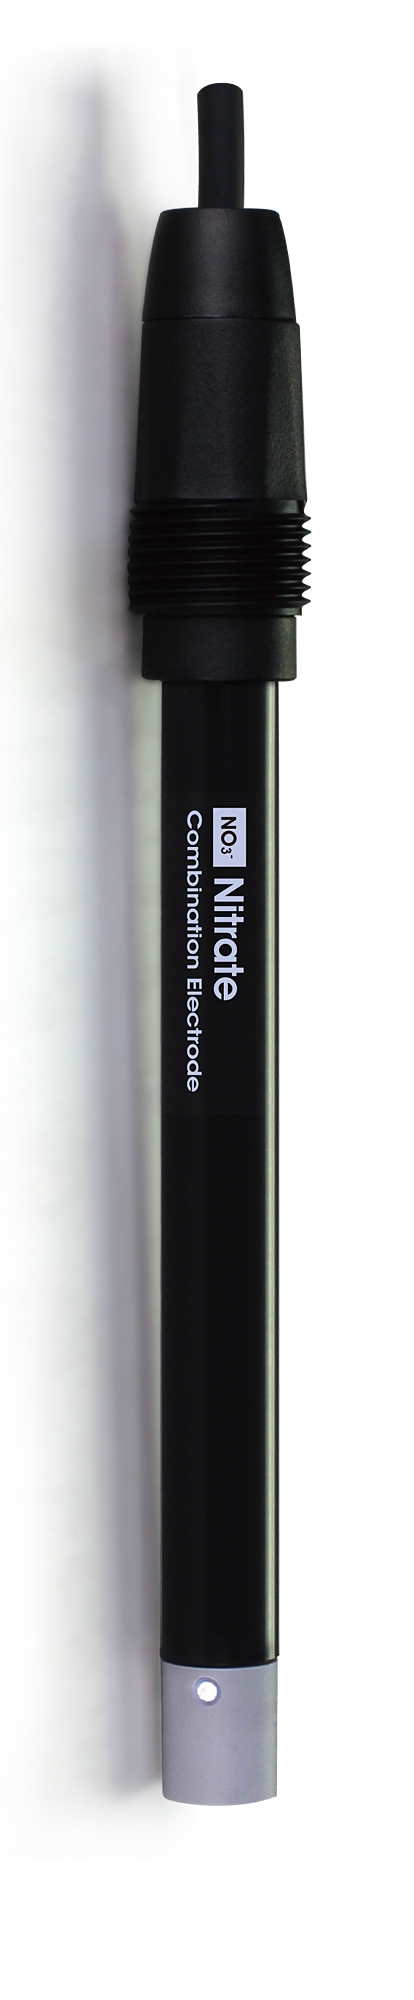 CS6510NO3 A Nitrogen Oxide Ion Selective Electrode sensor